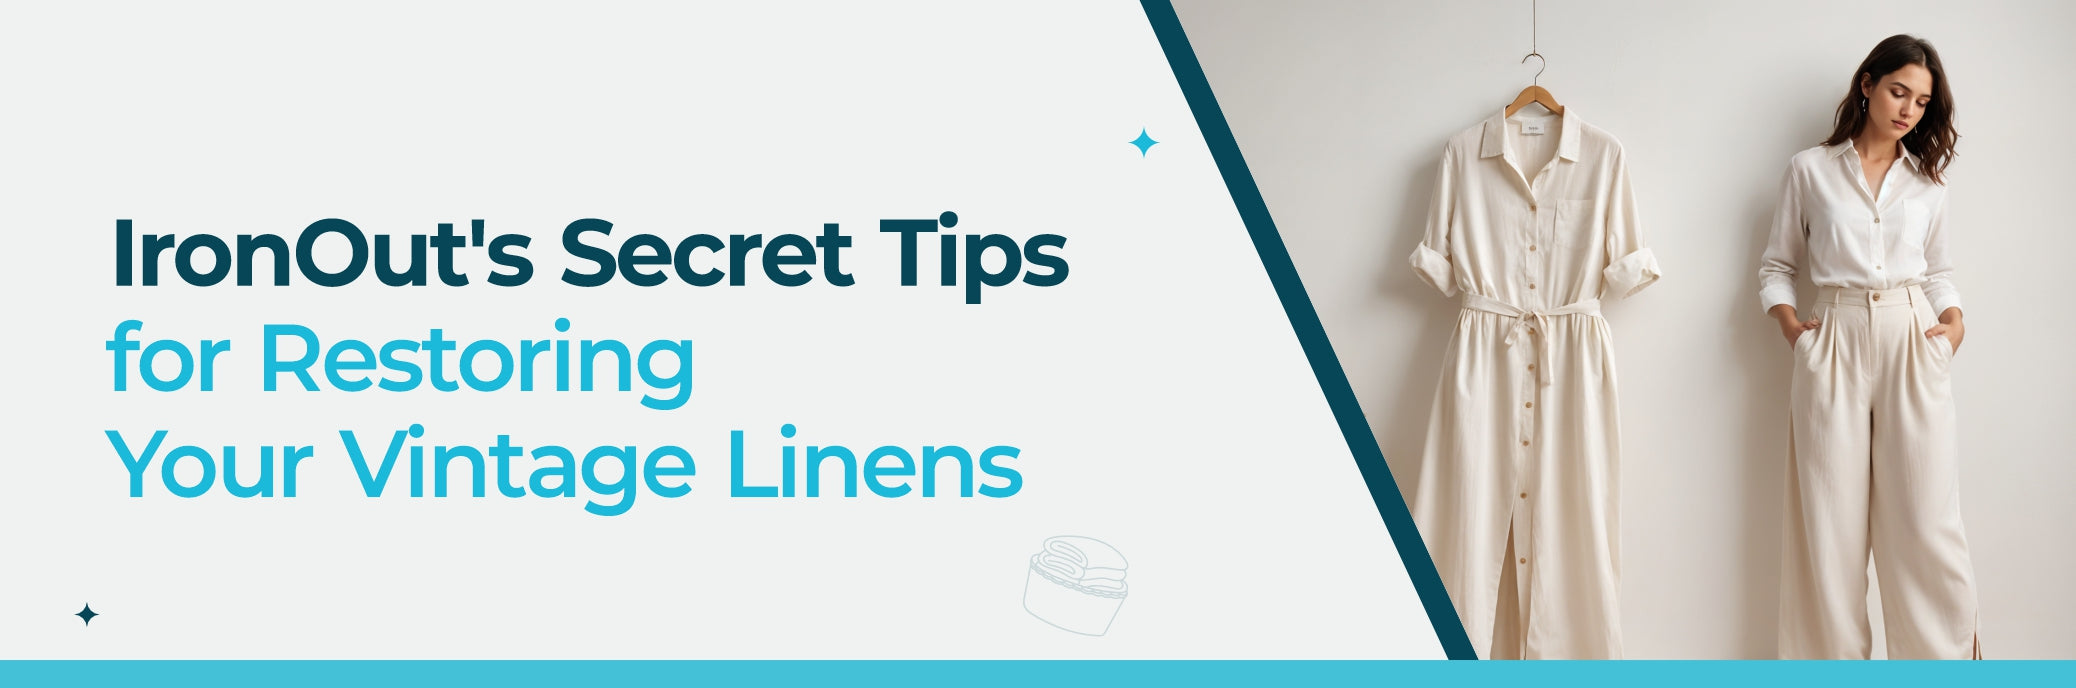 IronOut's Secret Tips for Restoring Your Vintage Linens